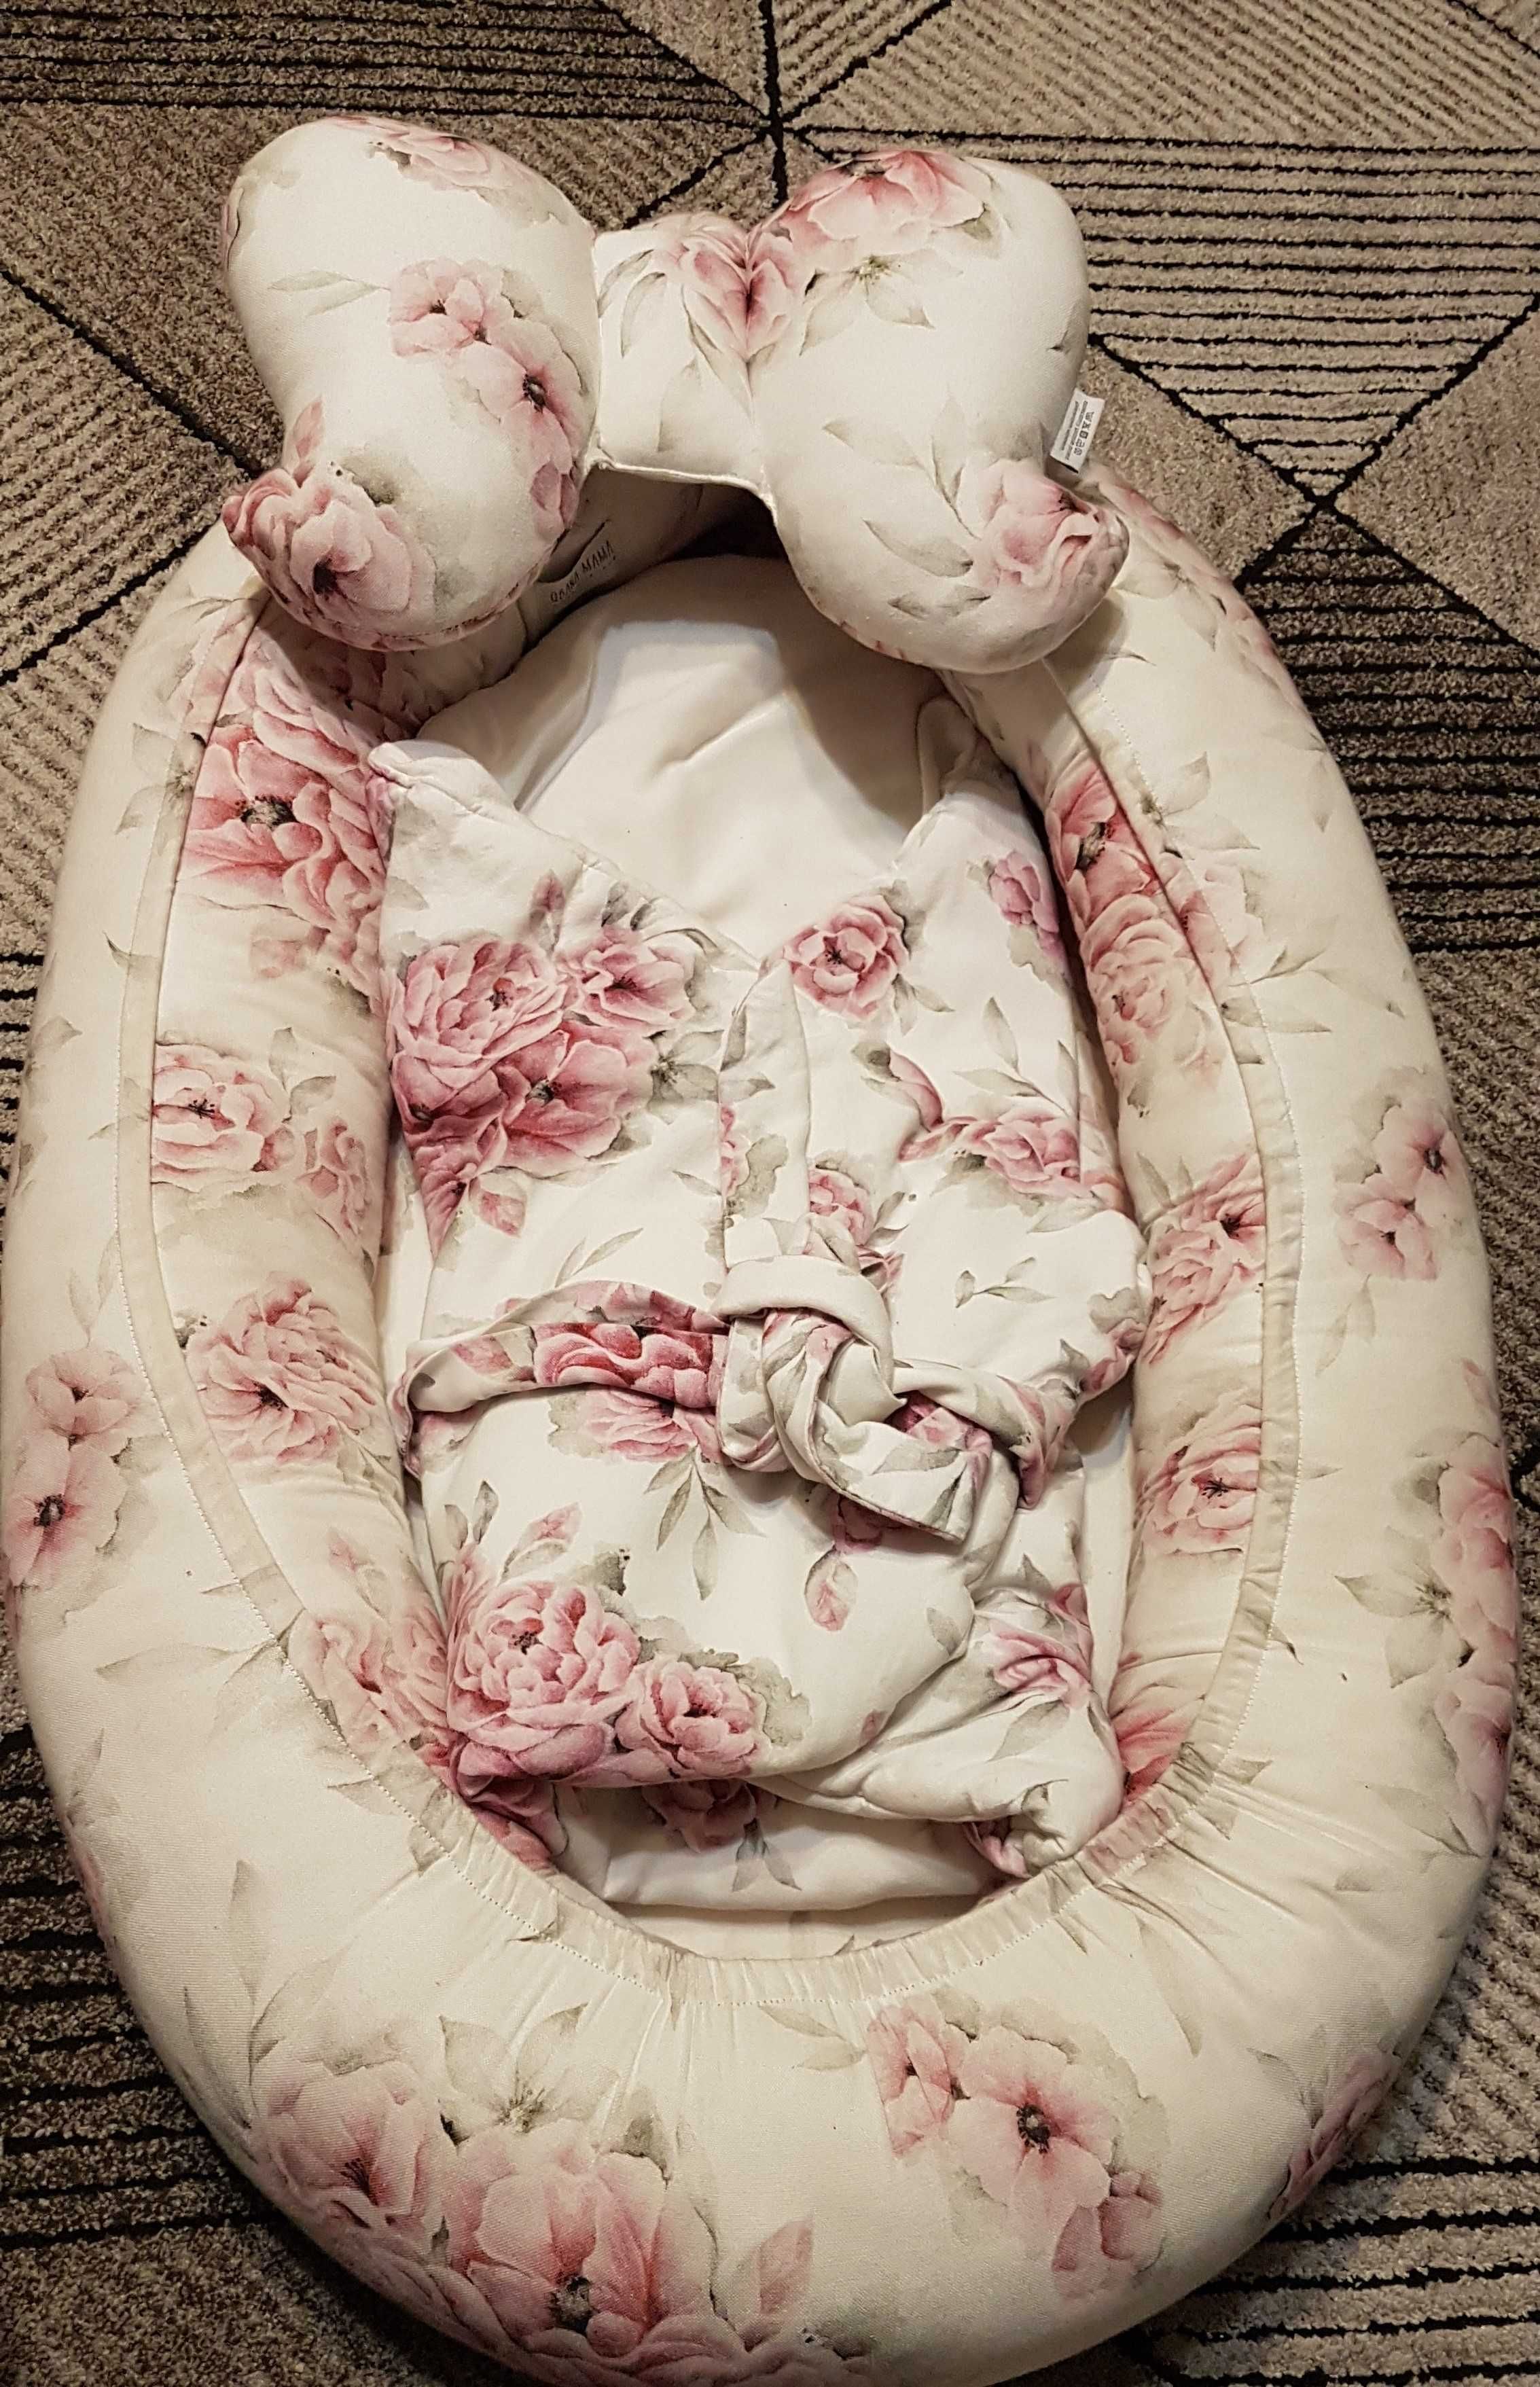 Kokon niemowlęcy in blossom, Qbana Mama